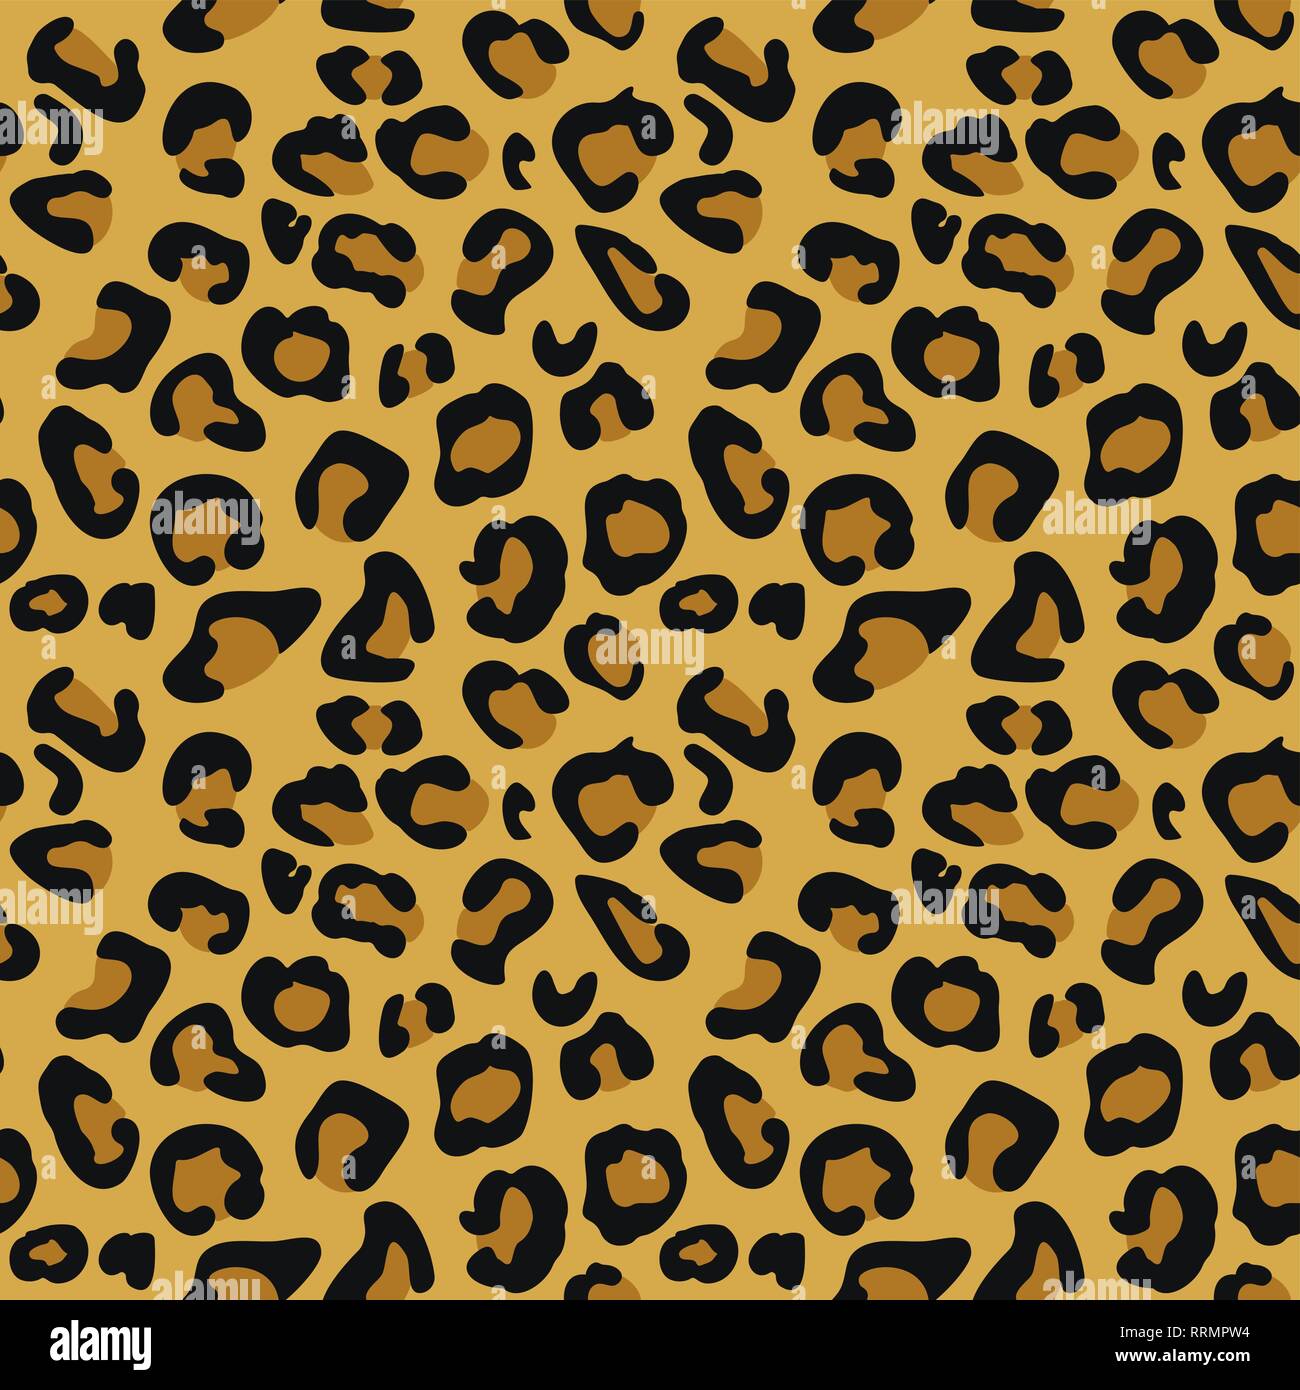 Cheetah Animal Print Pattern Seamless Tile Stock Vector